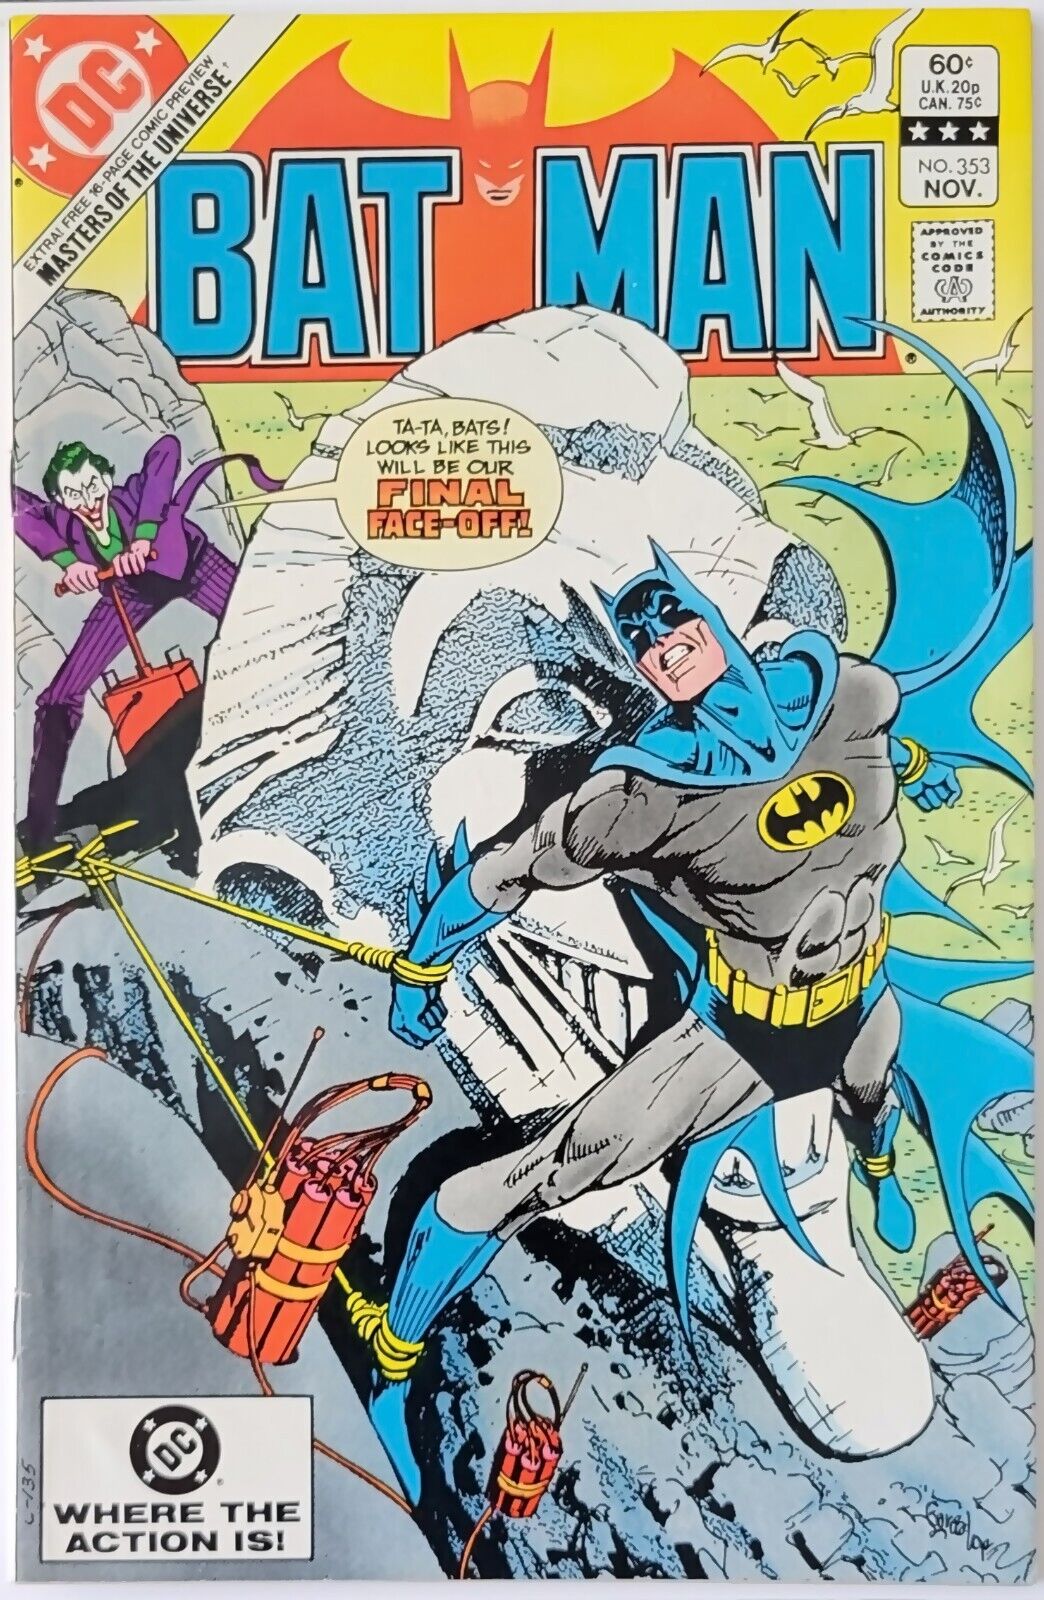 Batman #353 (1982) Vintage Key Comic | Joker Cover Art, Harlan Quinn Reference